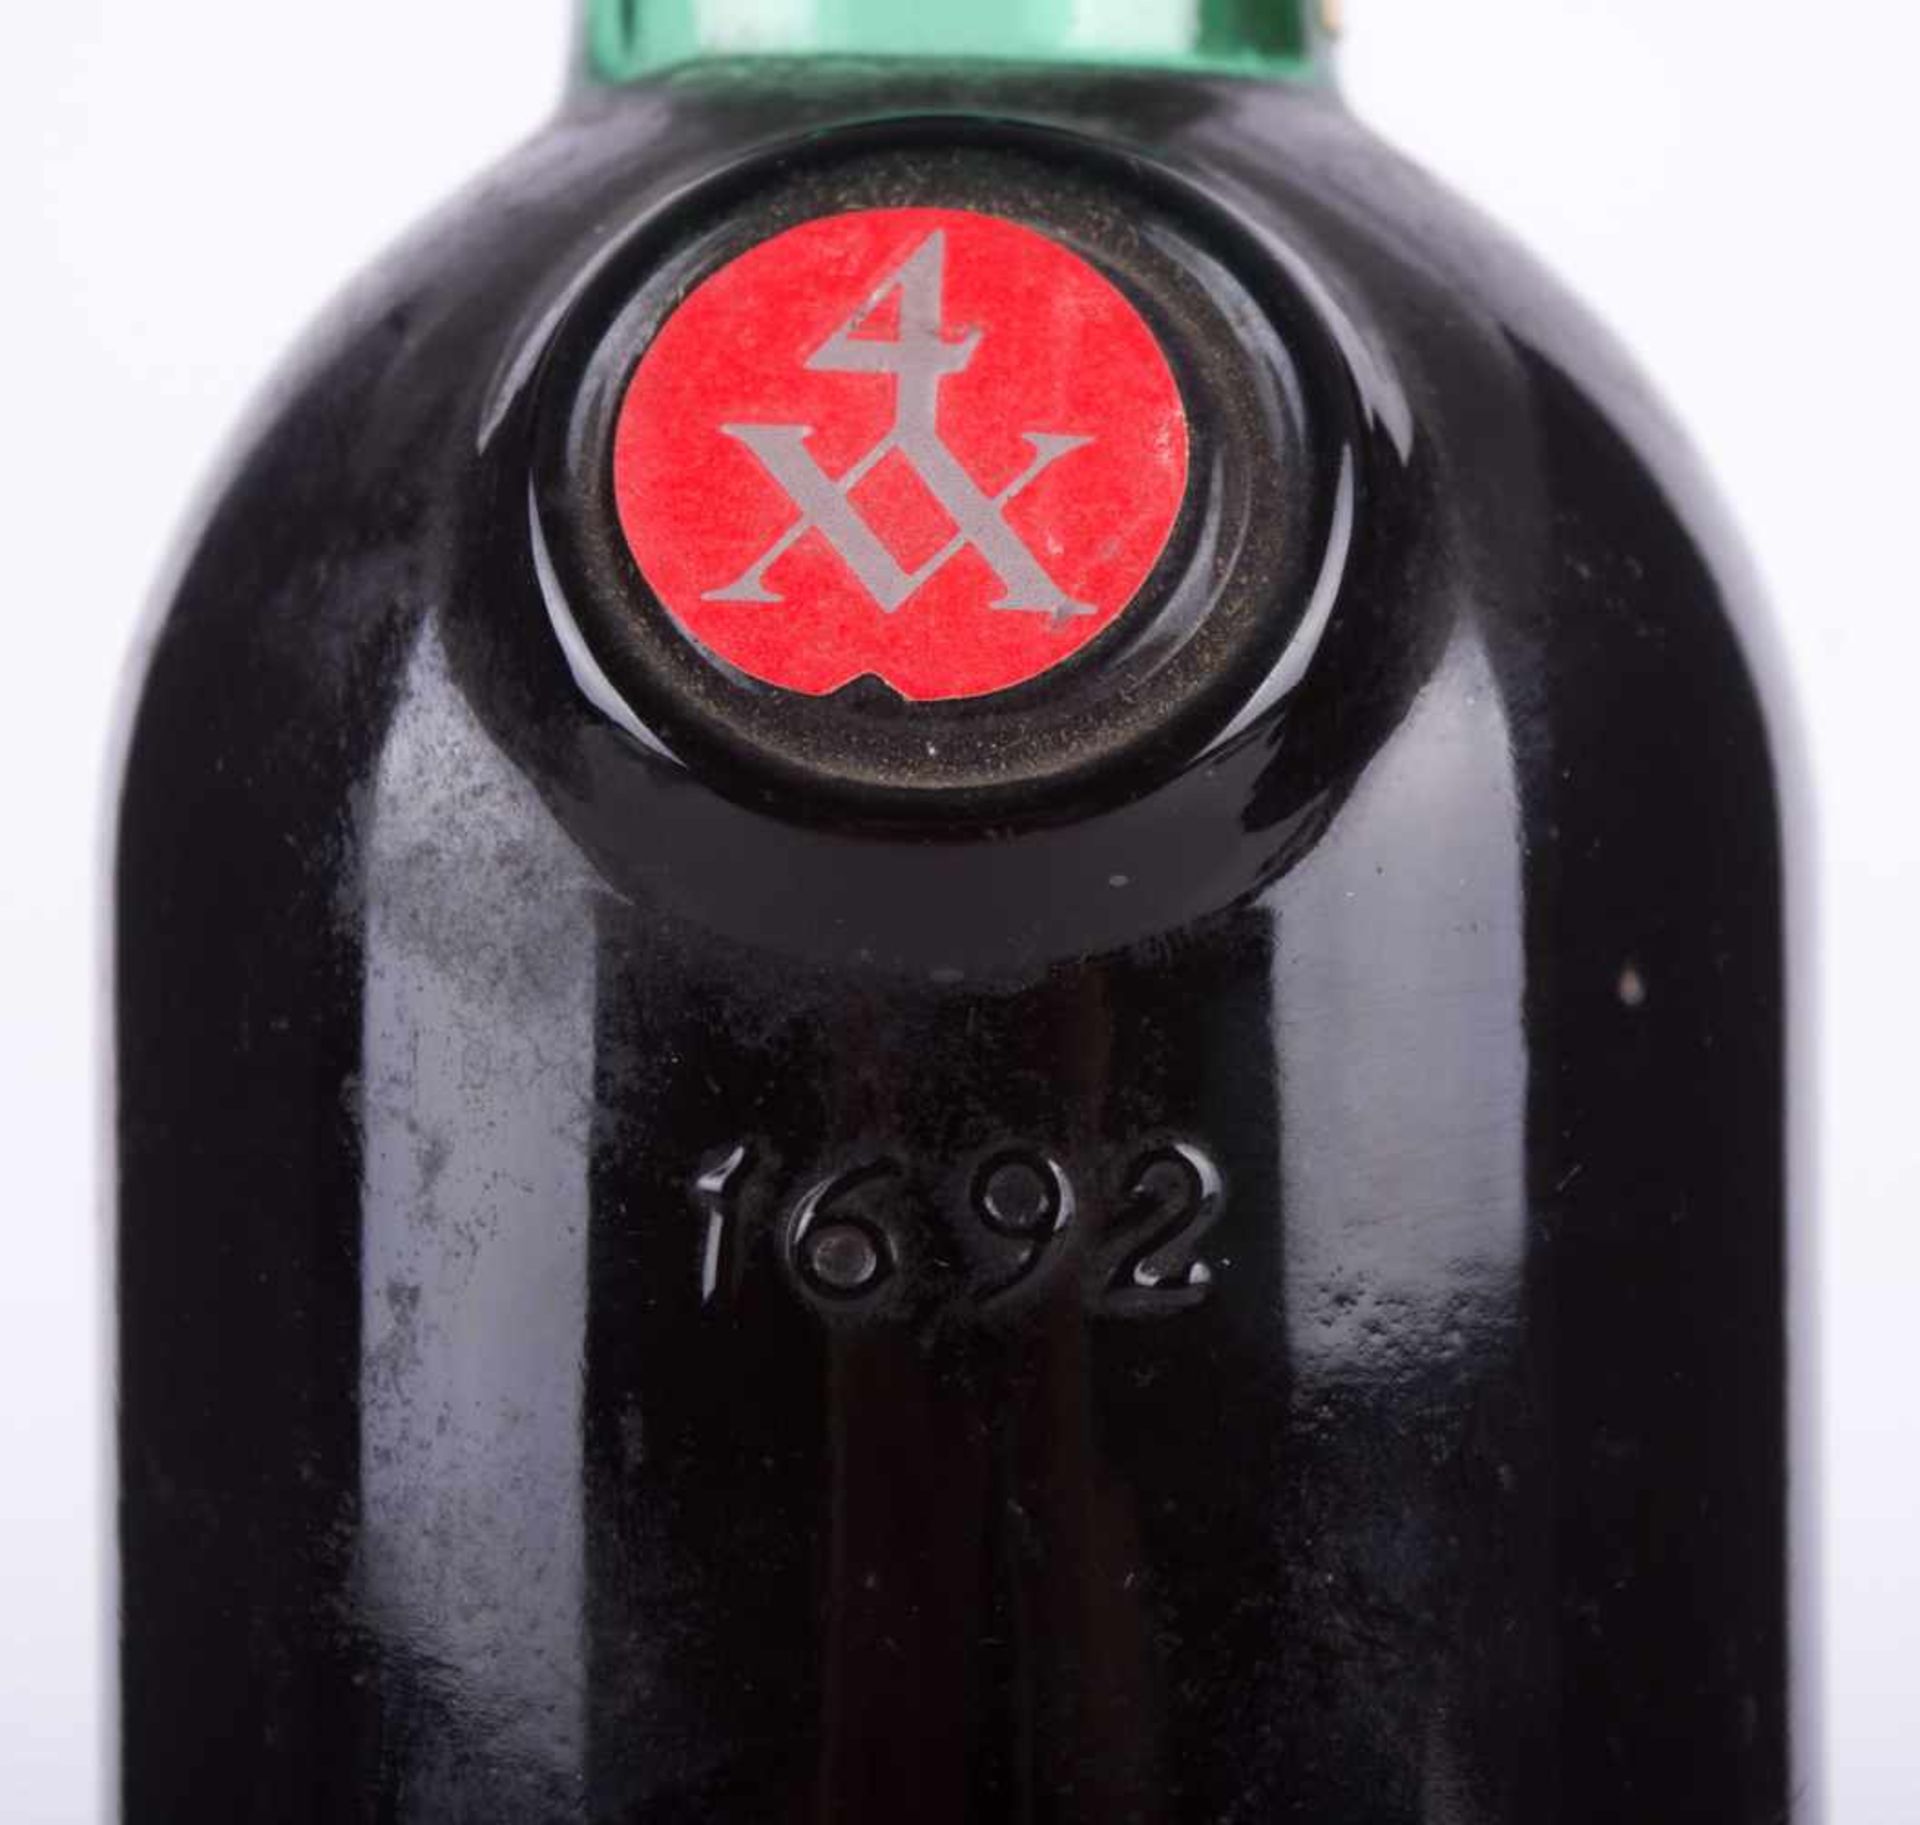 Taylor's Portwein 1960/70er Füllstand normal, Etikett guter Zustand, 0,75 l Taylor's port wine - Image 2 of 5